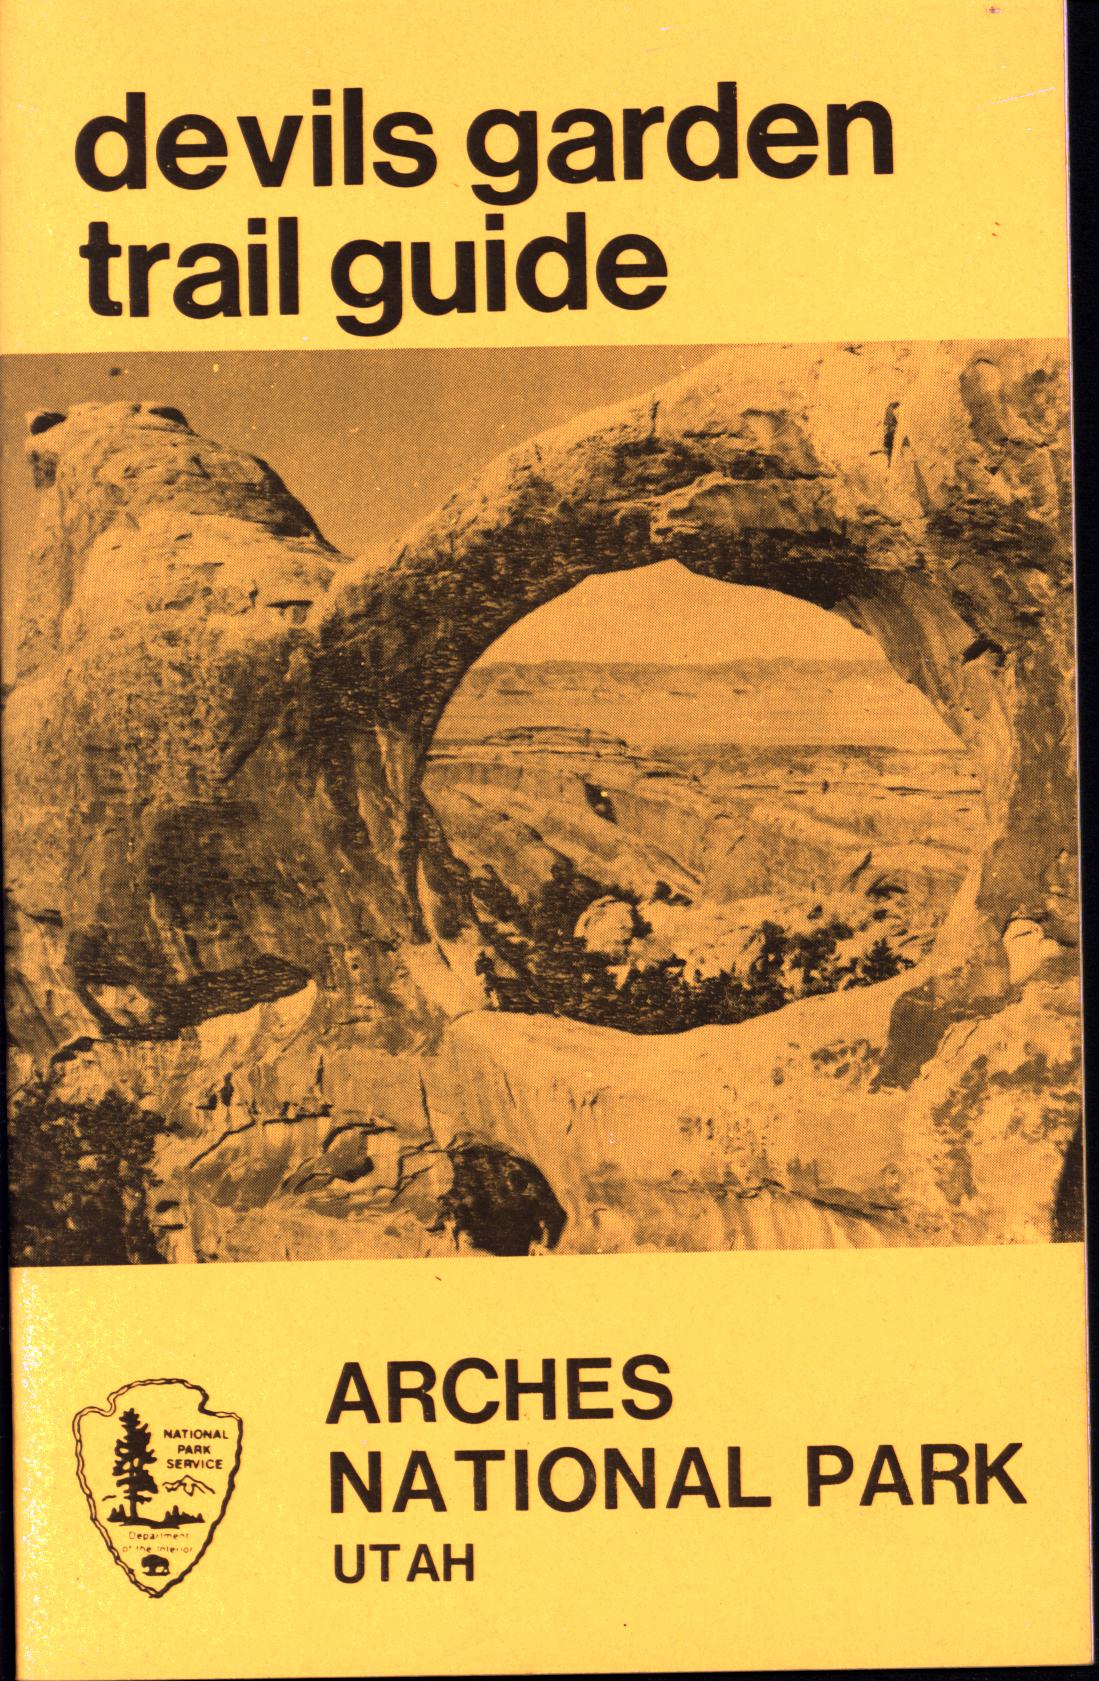 DEVILS GARDEN TRAIL GUIDE: Arches National Park (UT). 